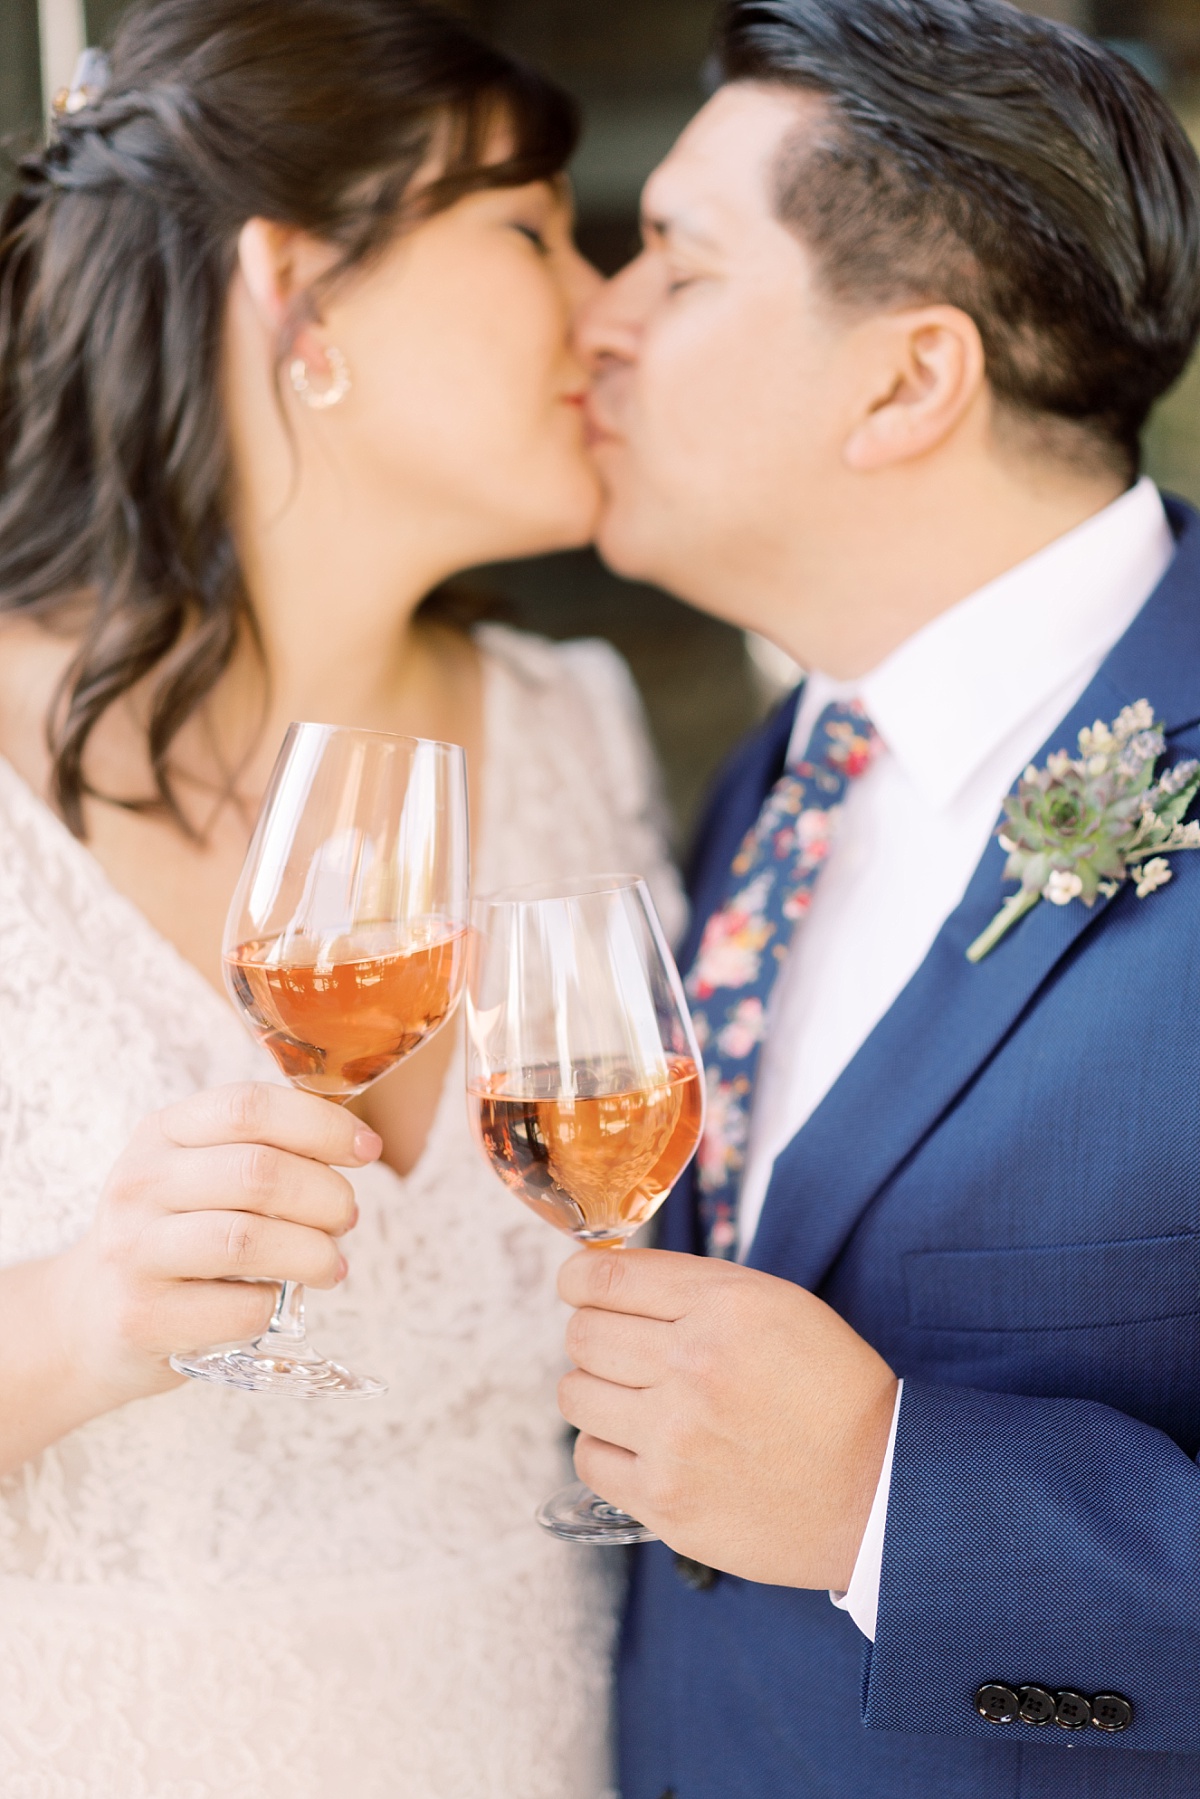 Couple kisses while holding glasses of wine during intimate wedding celebration